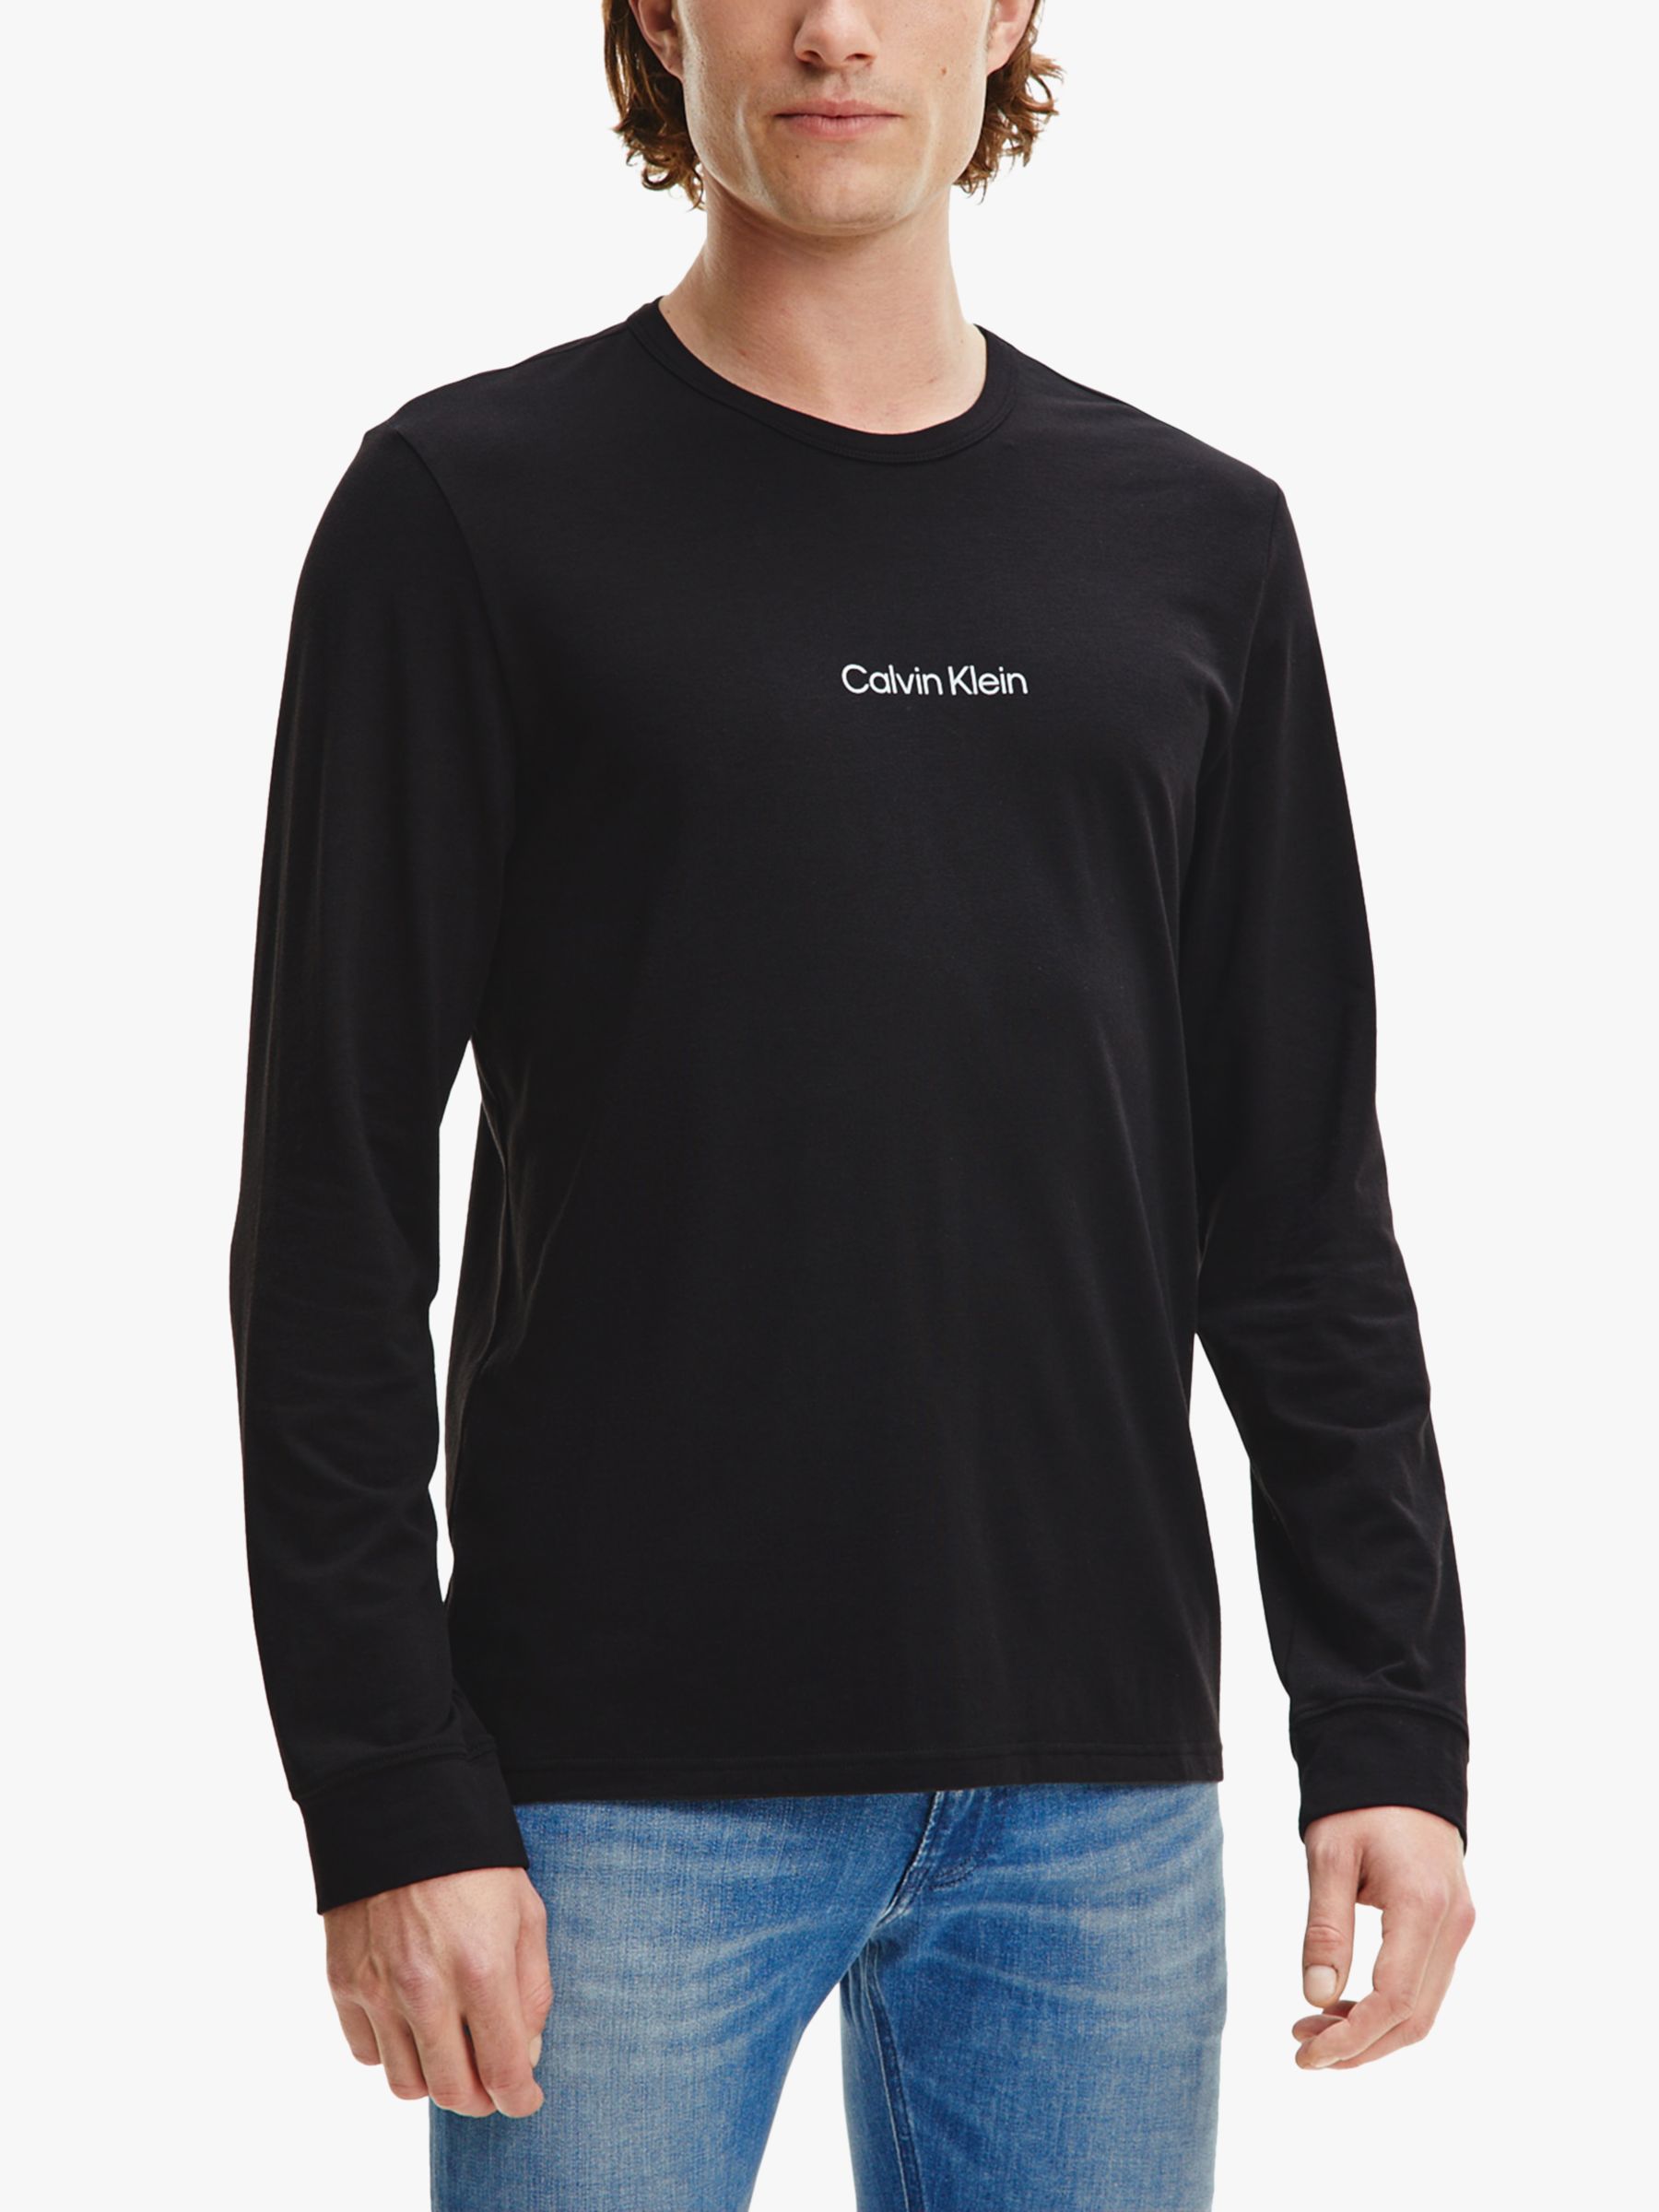 betreden Triviaal zij is Calvin Klein Long Sleeve Logo Lounge T-Shirt, Black at John Lewis & Partners